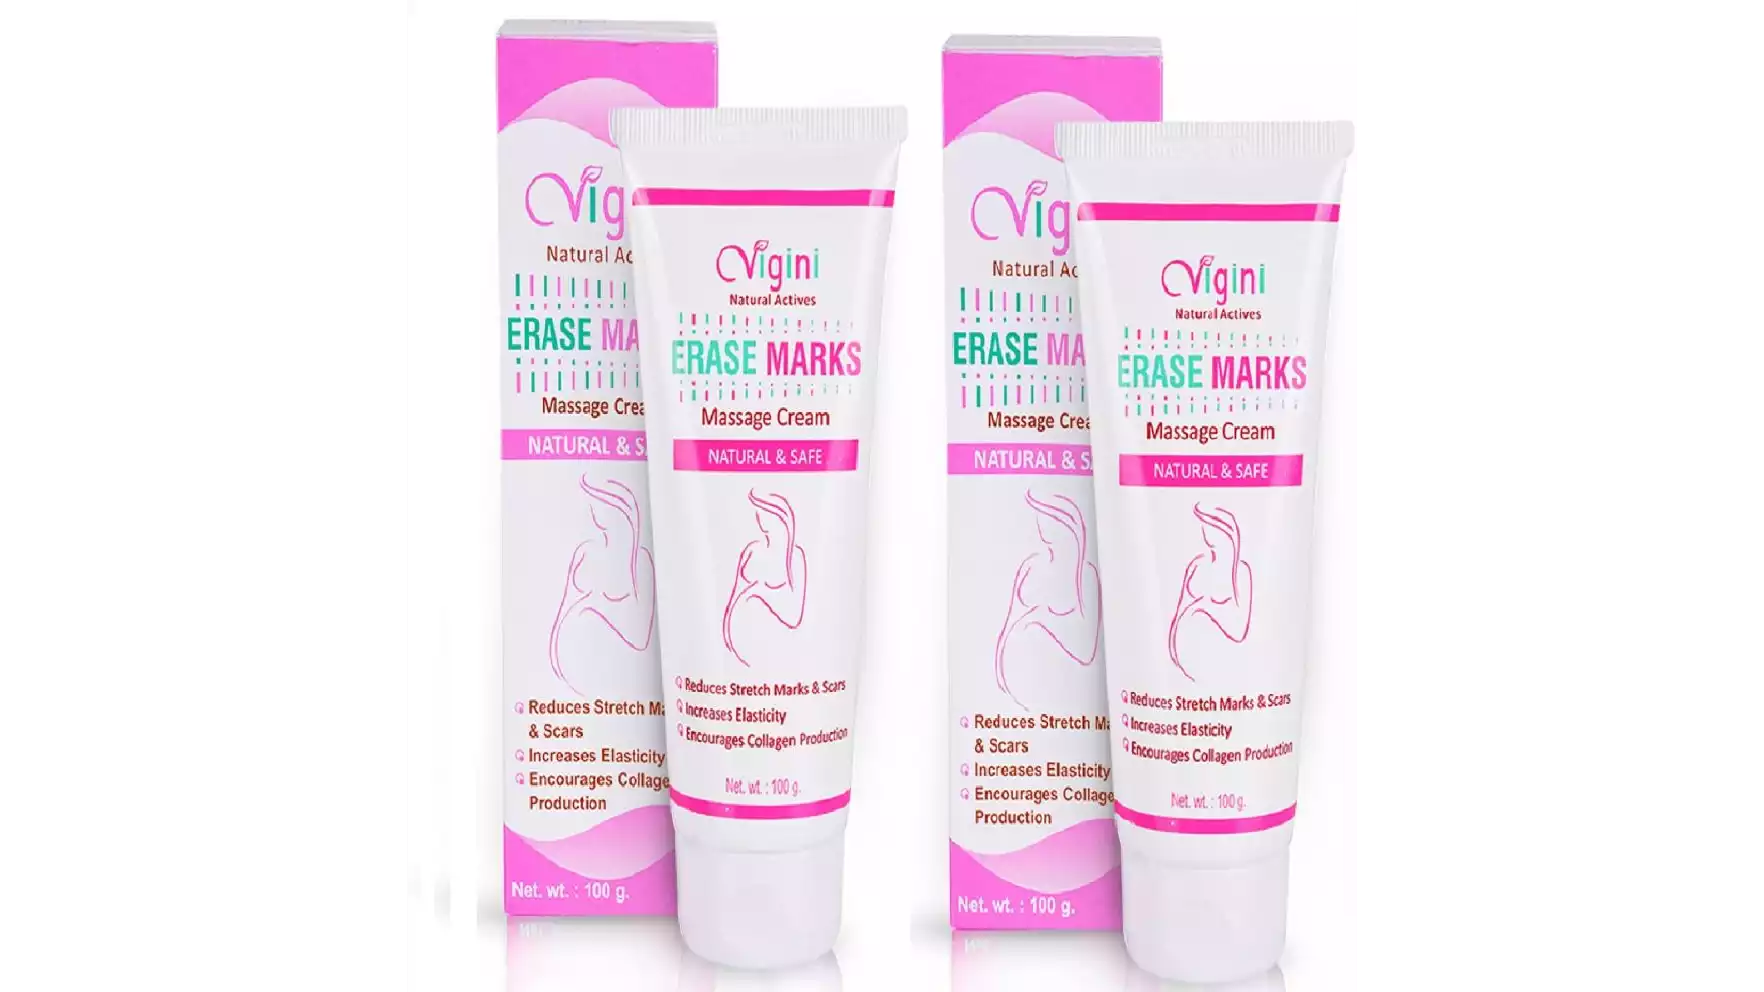 Vigini Stretch Massage Marks Cream (100g, Pack of 2)